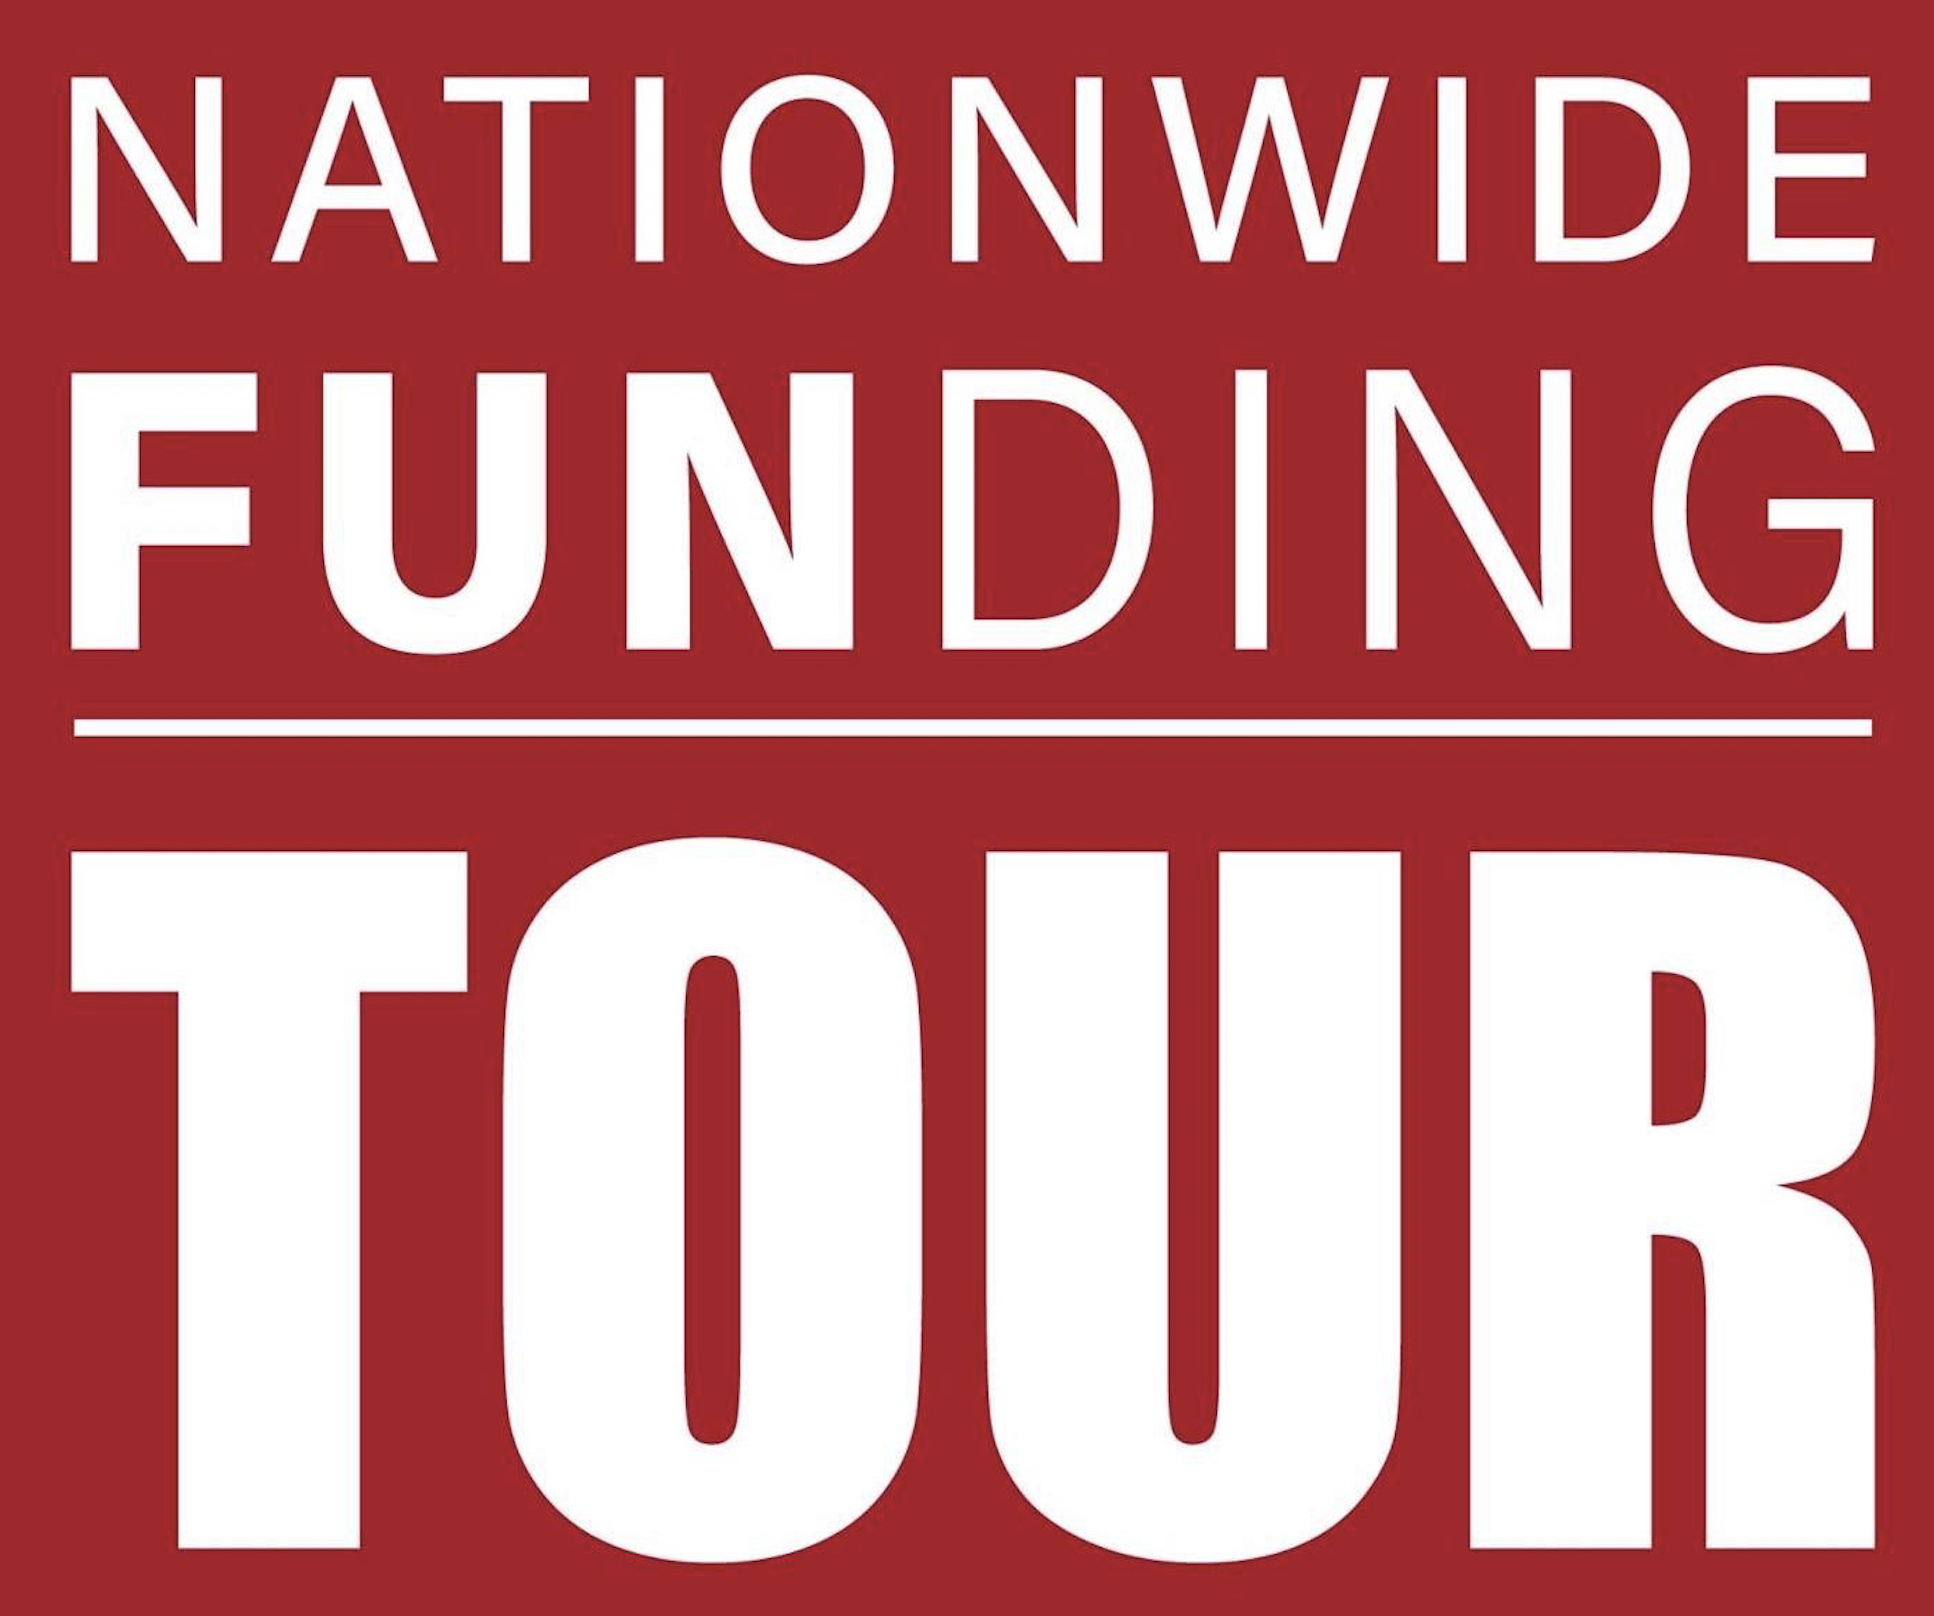 funding a tour